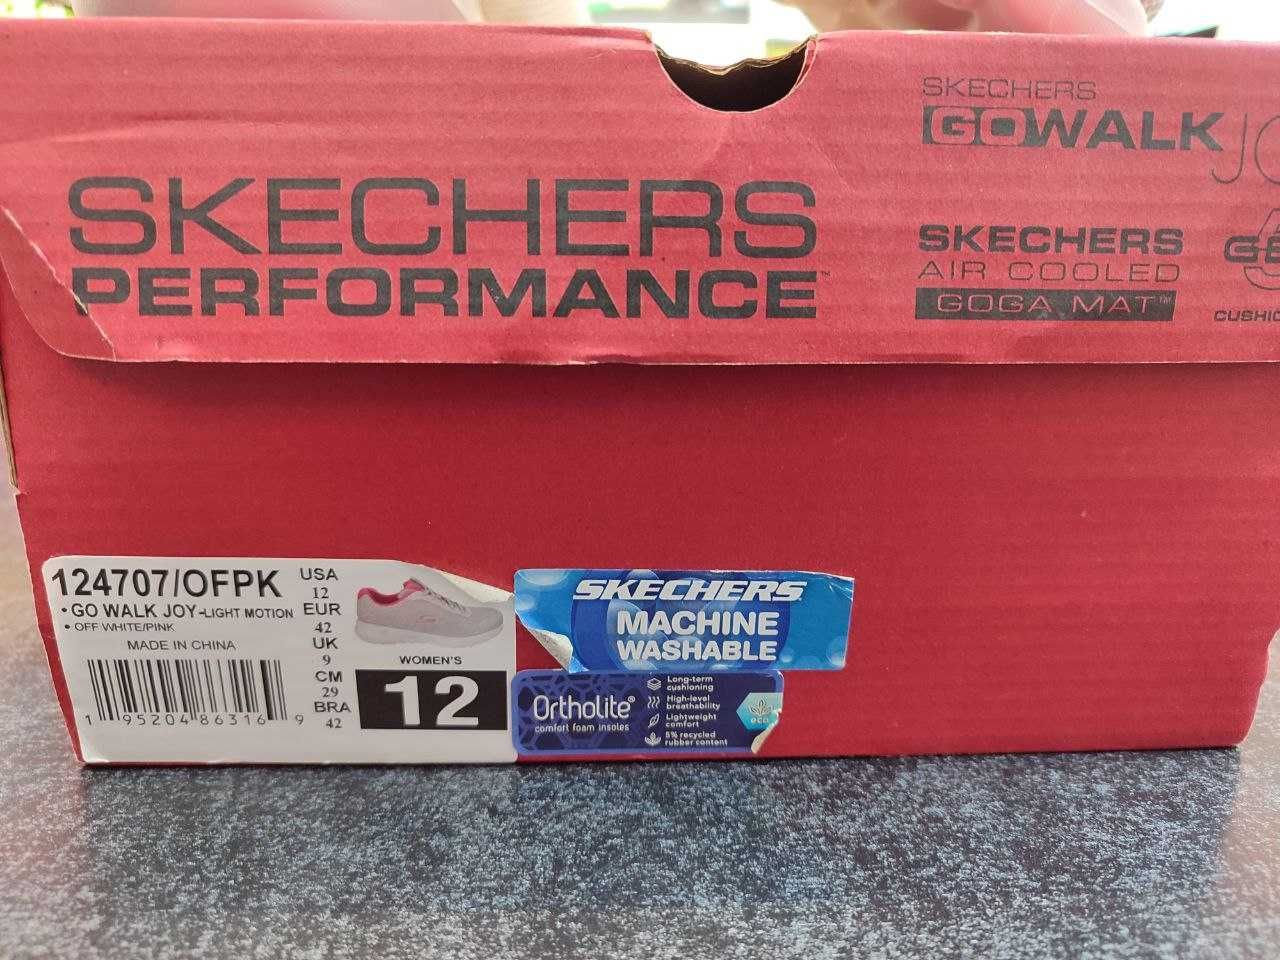 Skechers performence